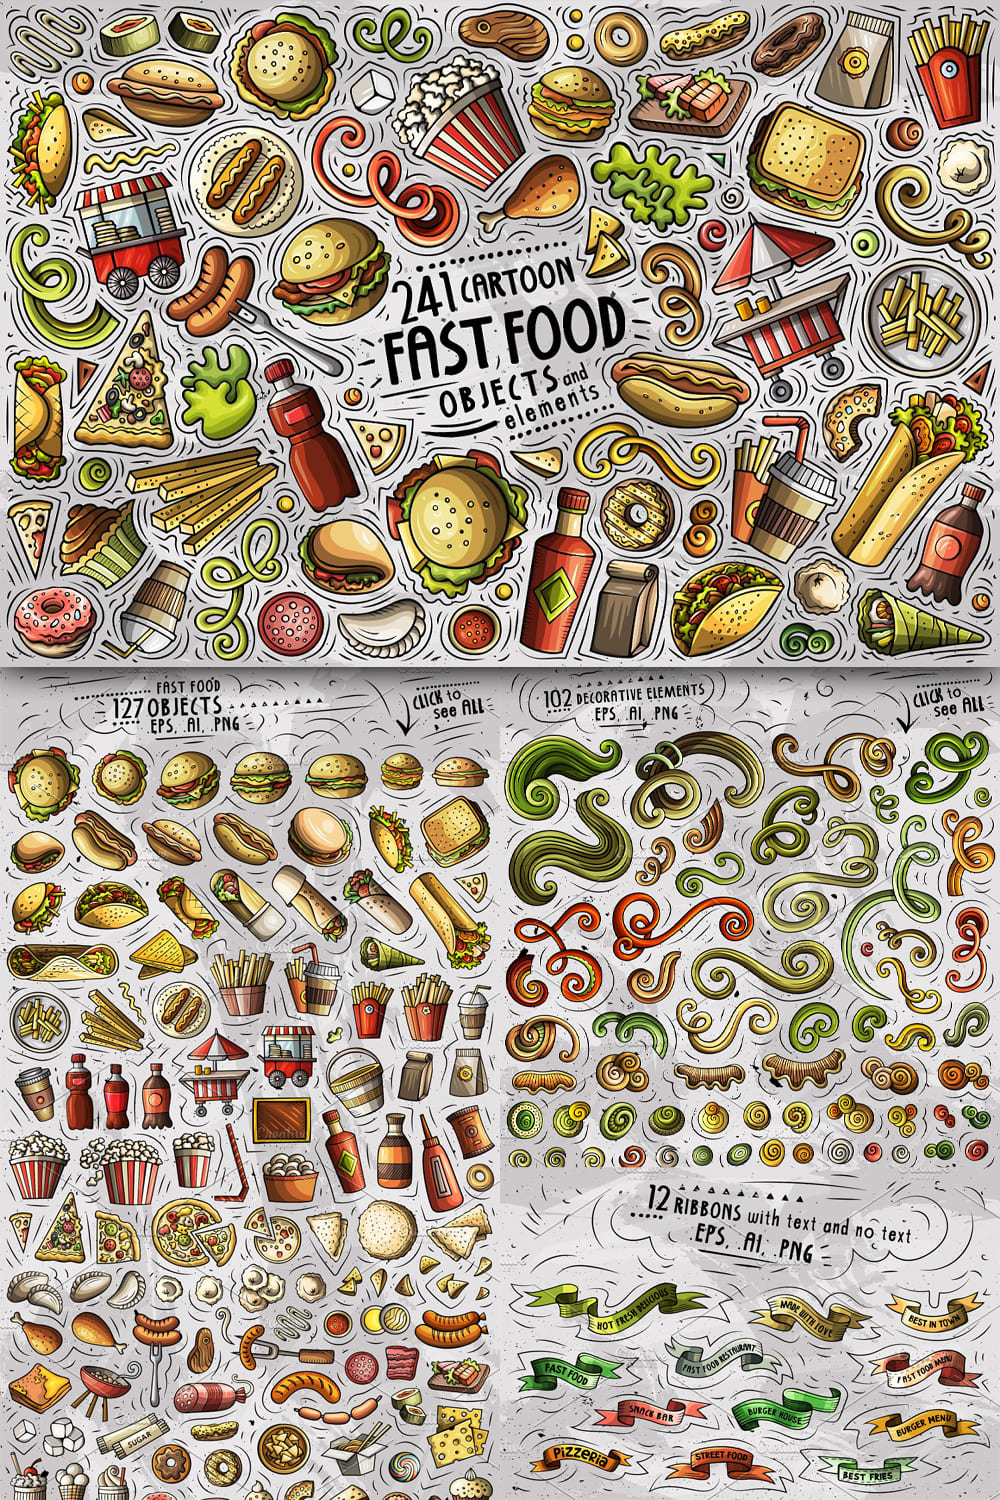 Fast Food Cartoon Objects Set Pinterest 1000 1500.